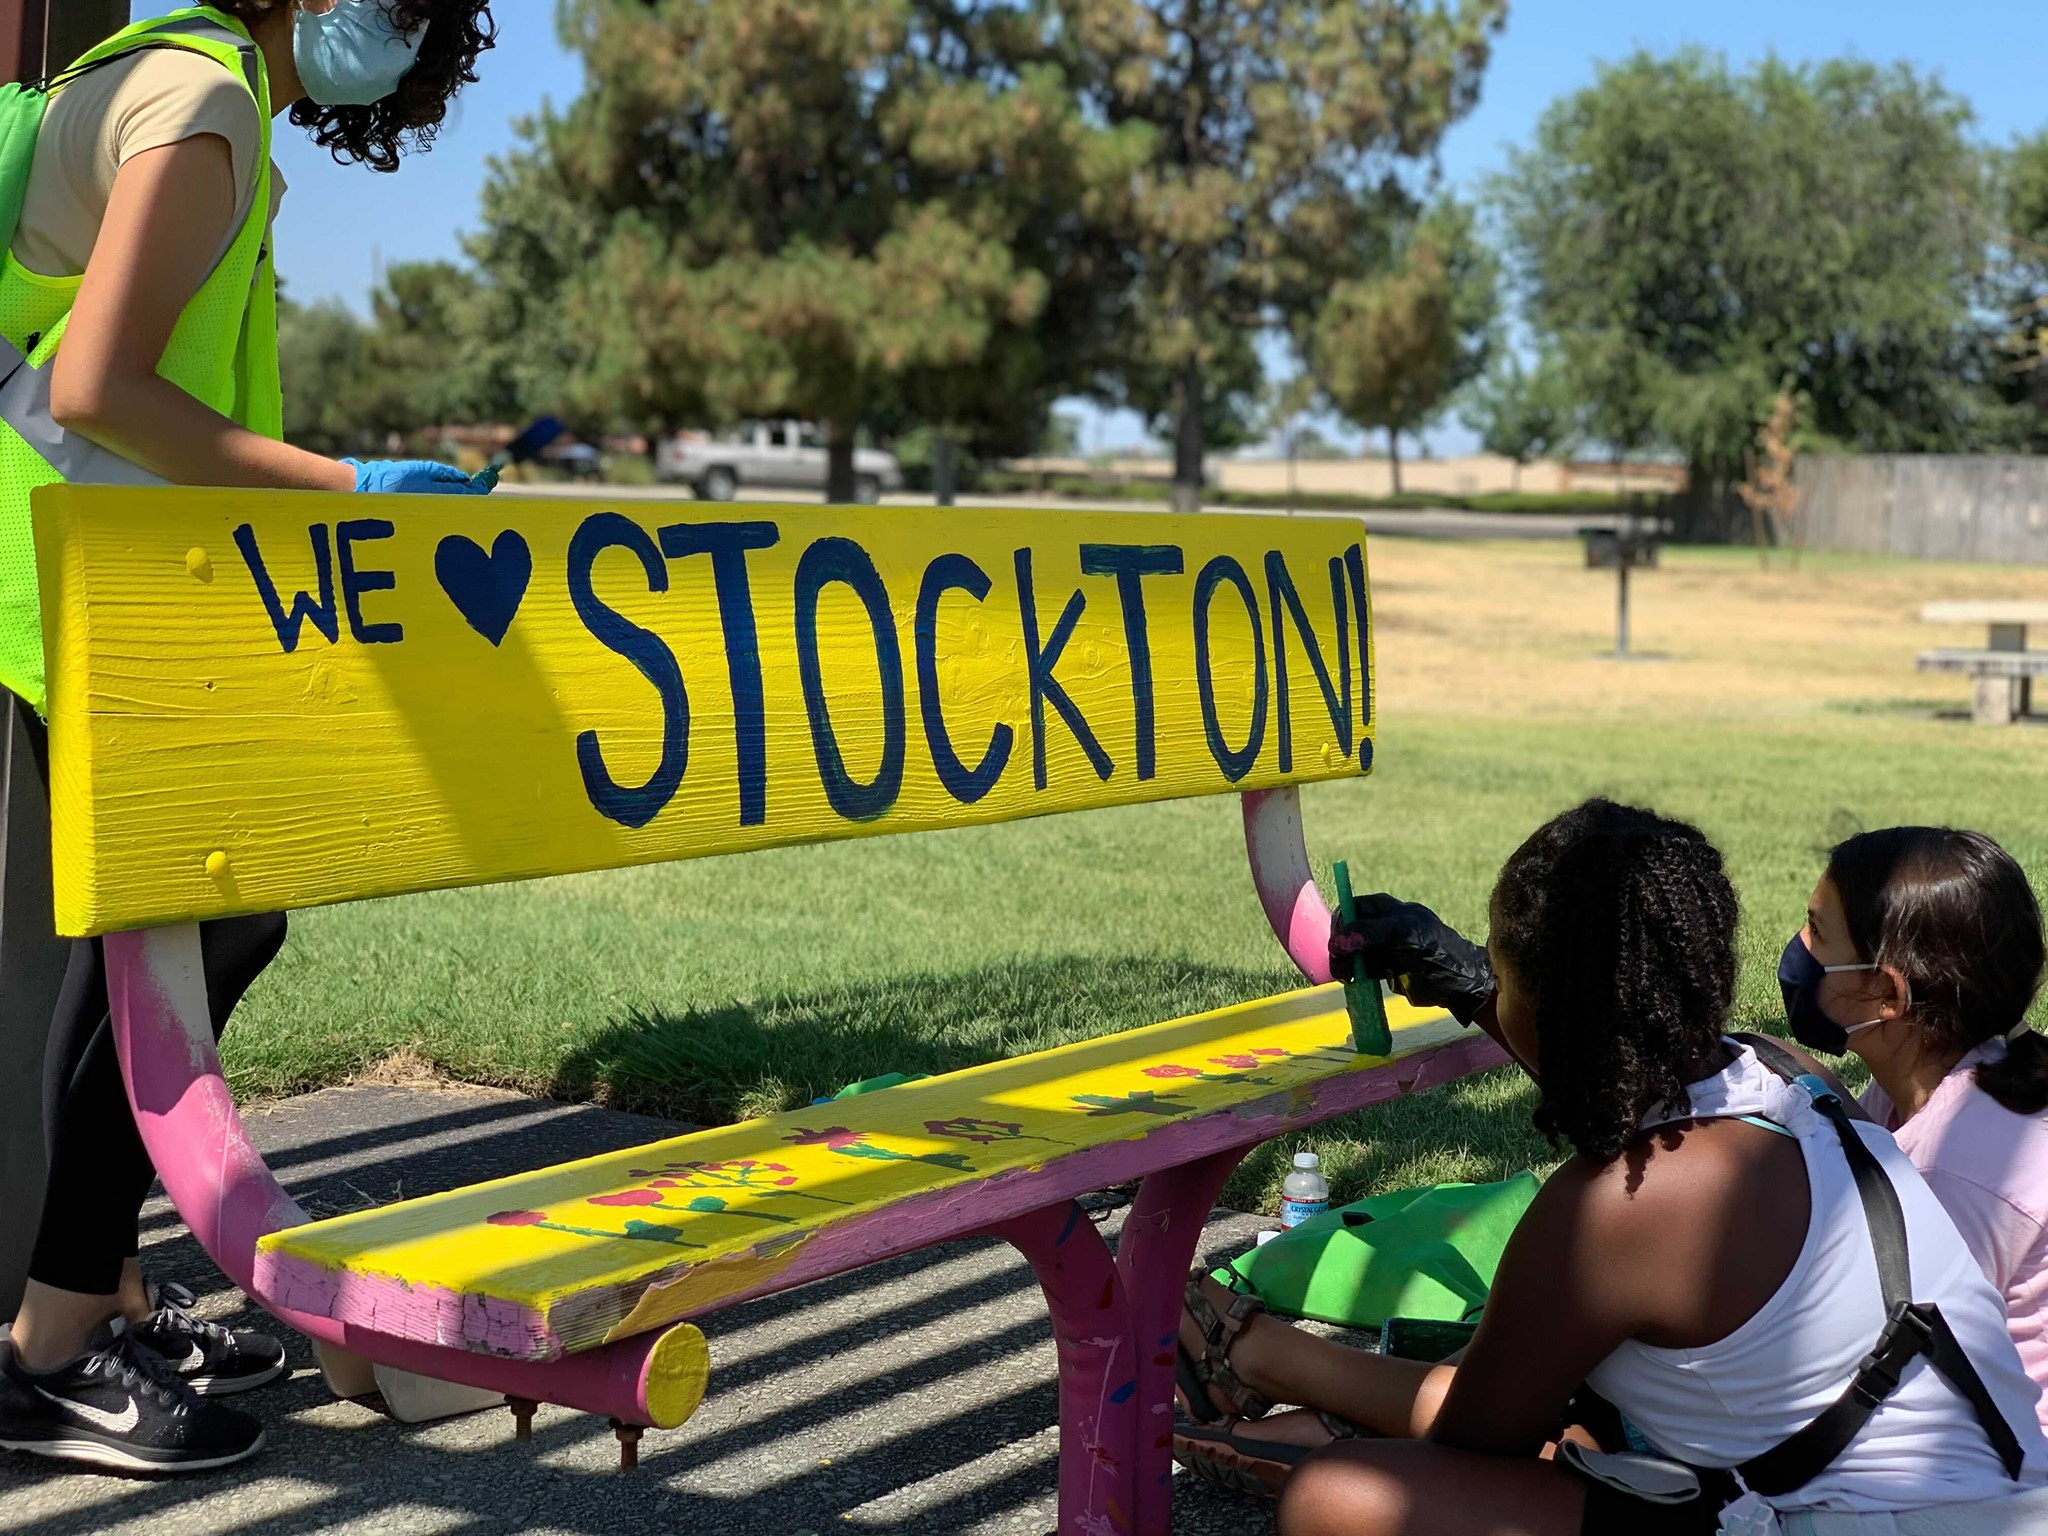 Children Paint "We Love Stockton" on a park bench